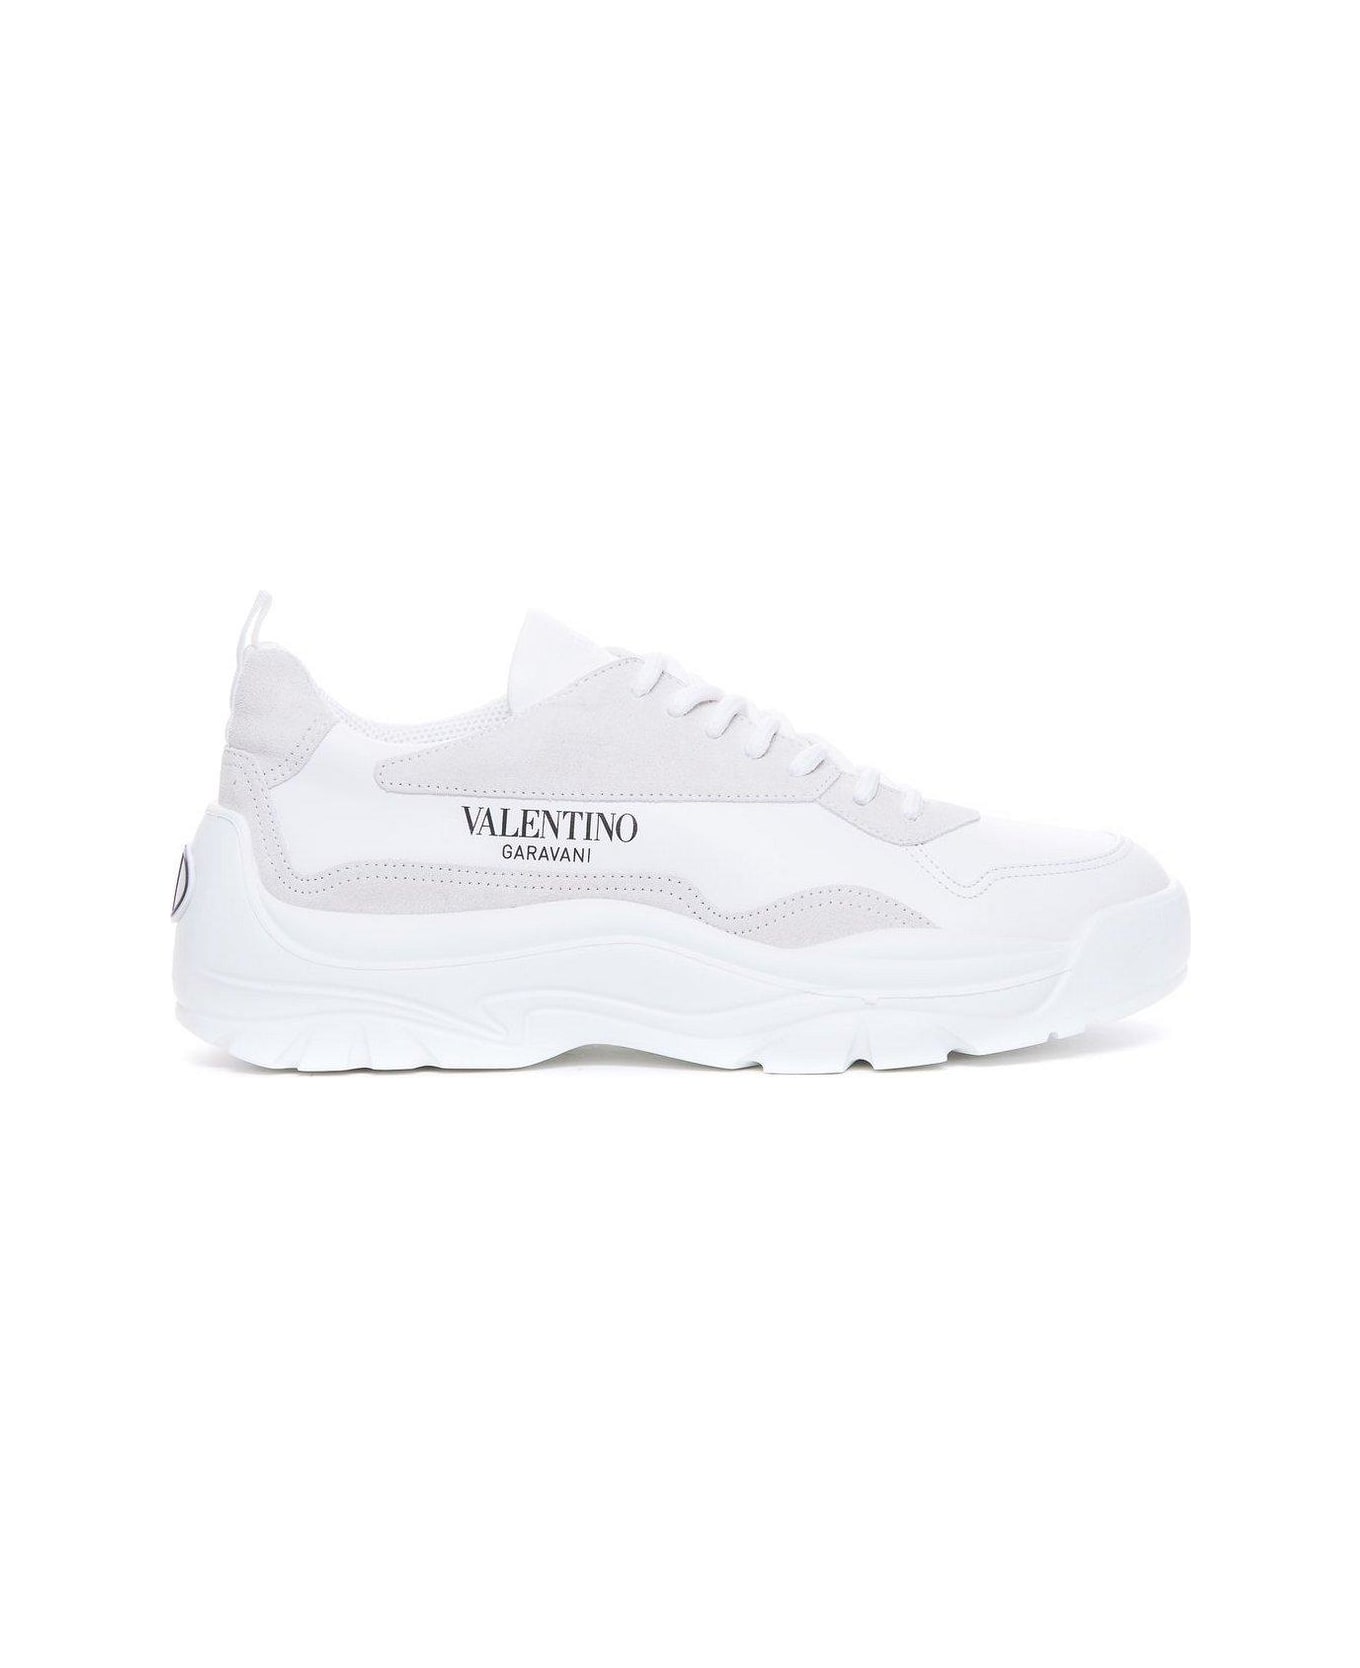 Valentino Garavani Gumboy Lace-up Sneakers - Bianco/bianco/bianco